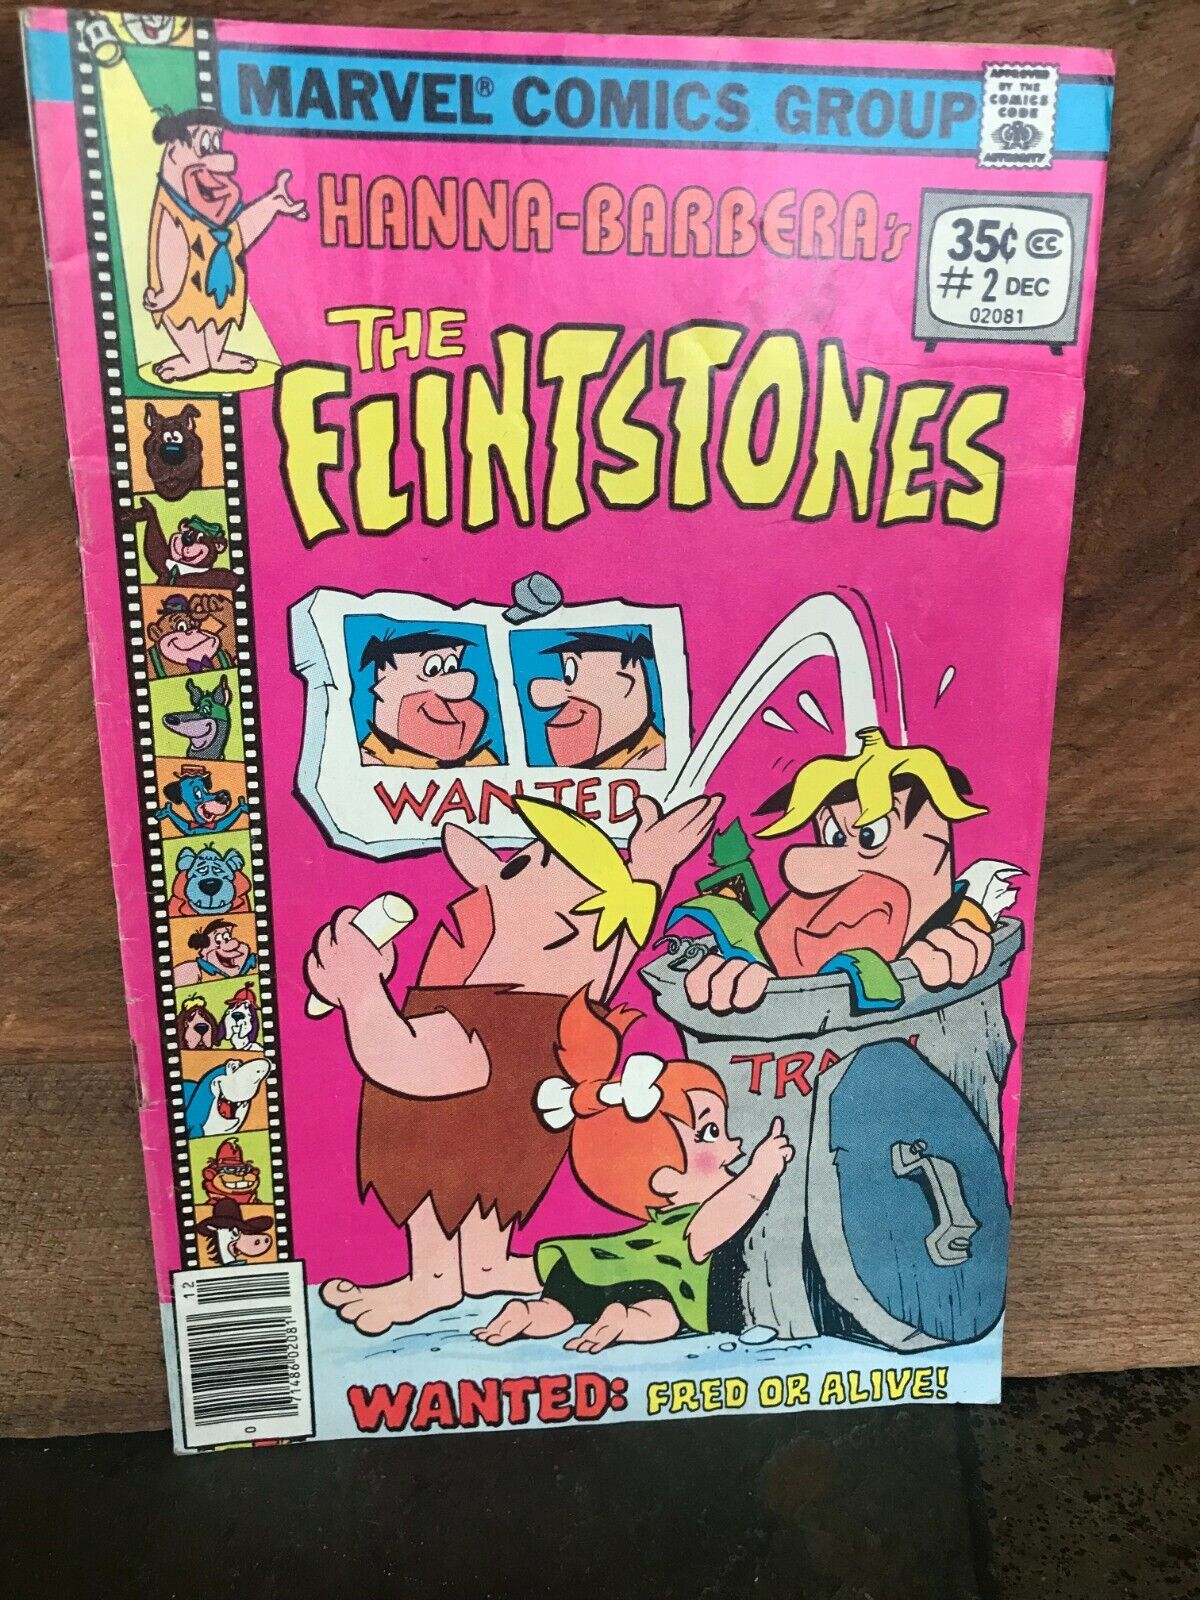 The Flintstones #2 December 1977 Marvel Comics Hanna-Barbera's